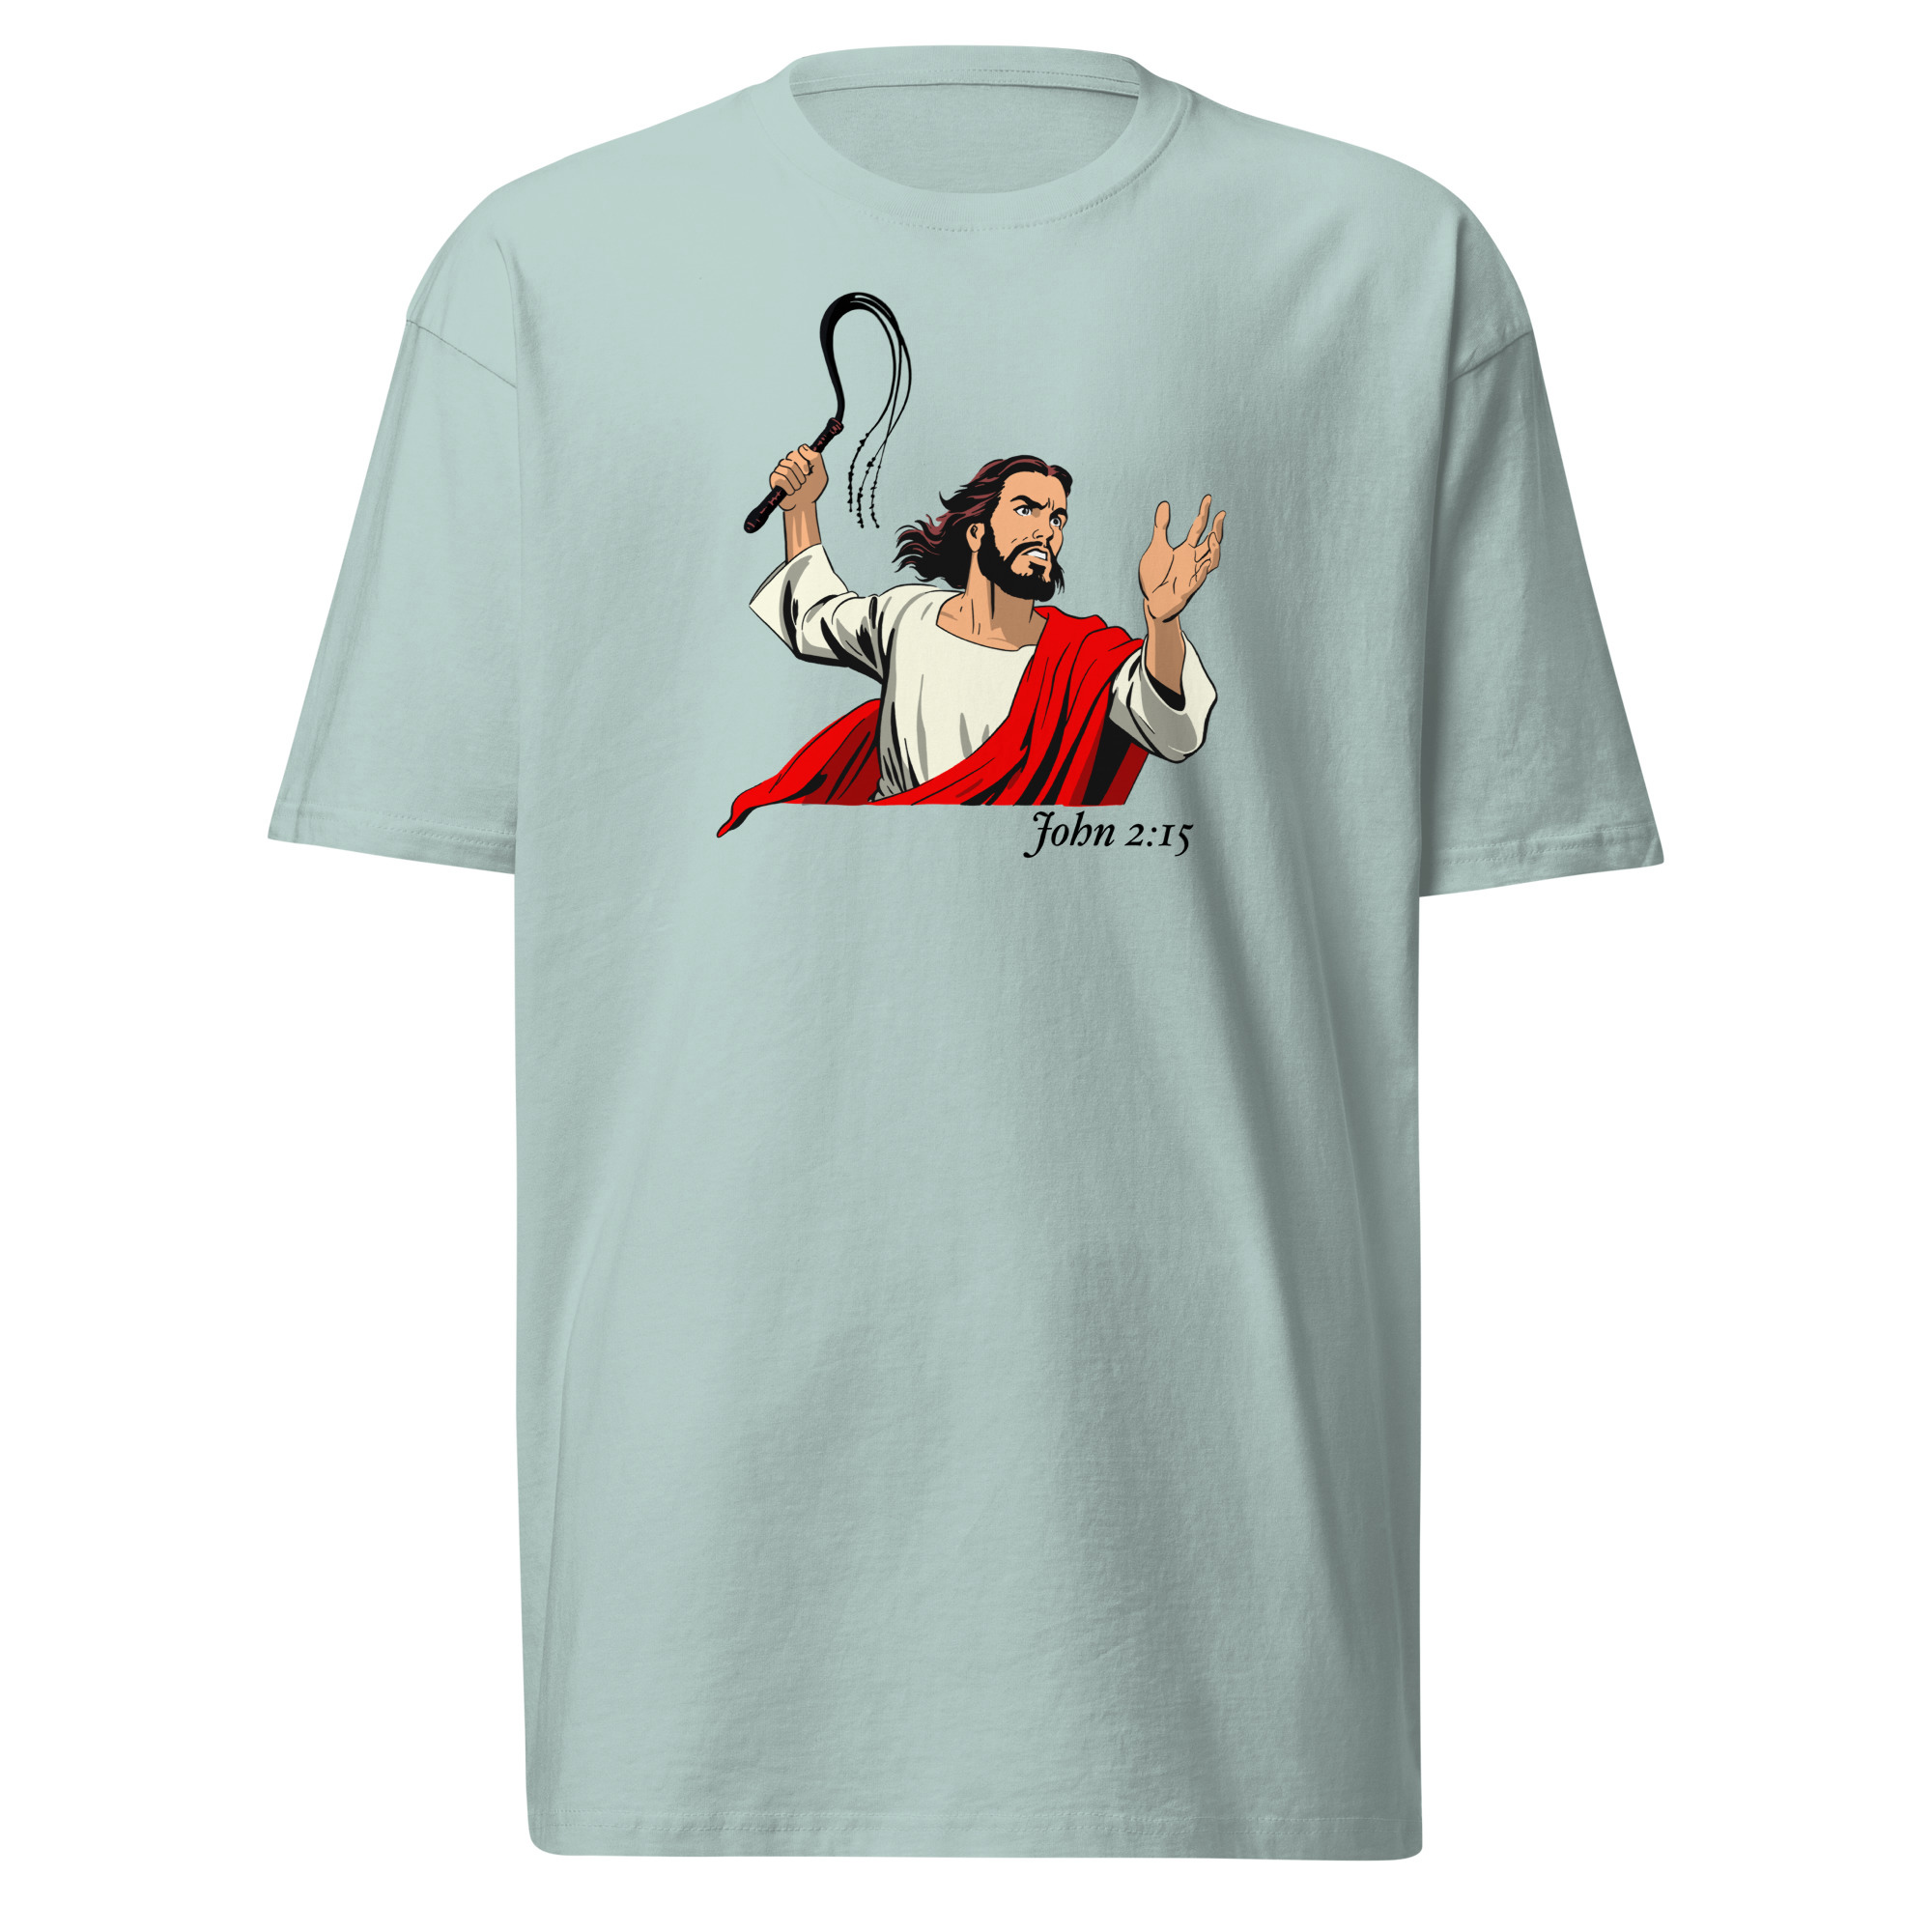 John 2:15 T-Shirt - Agave / L